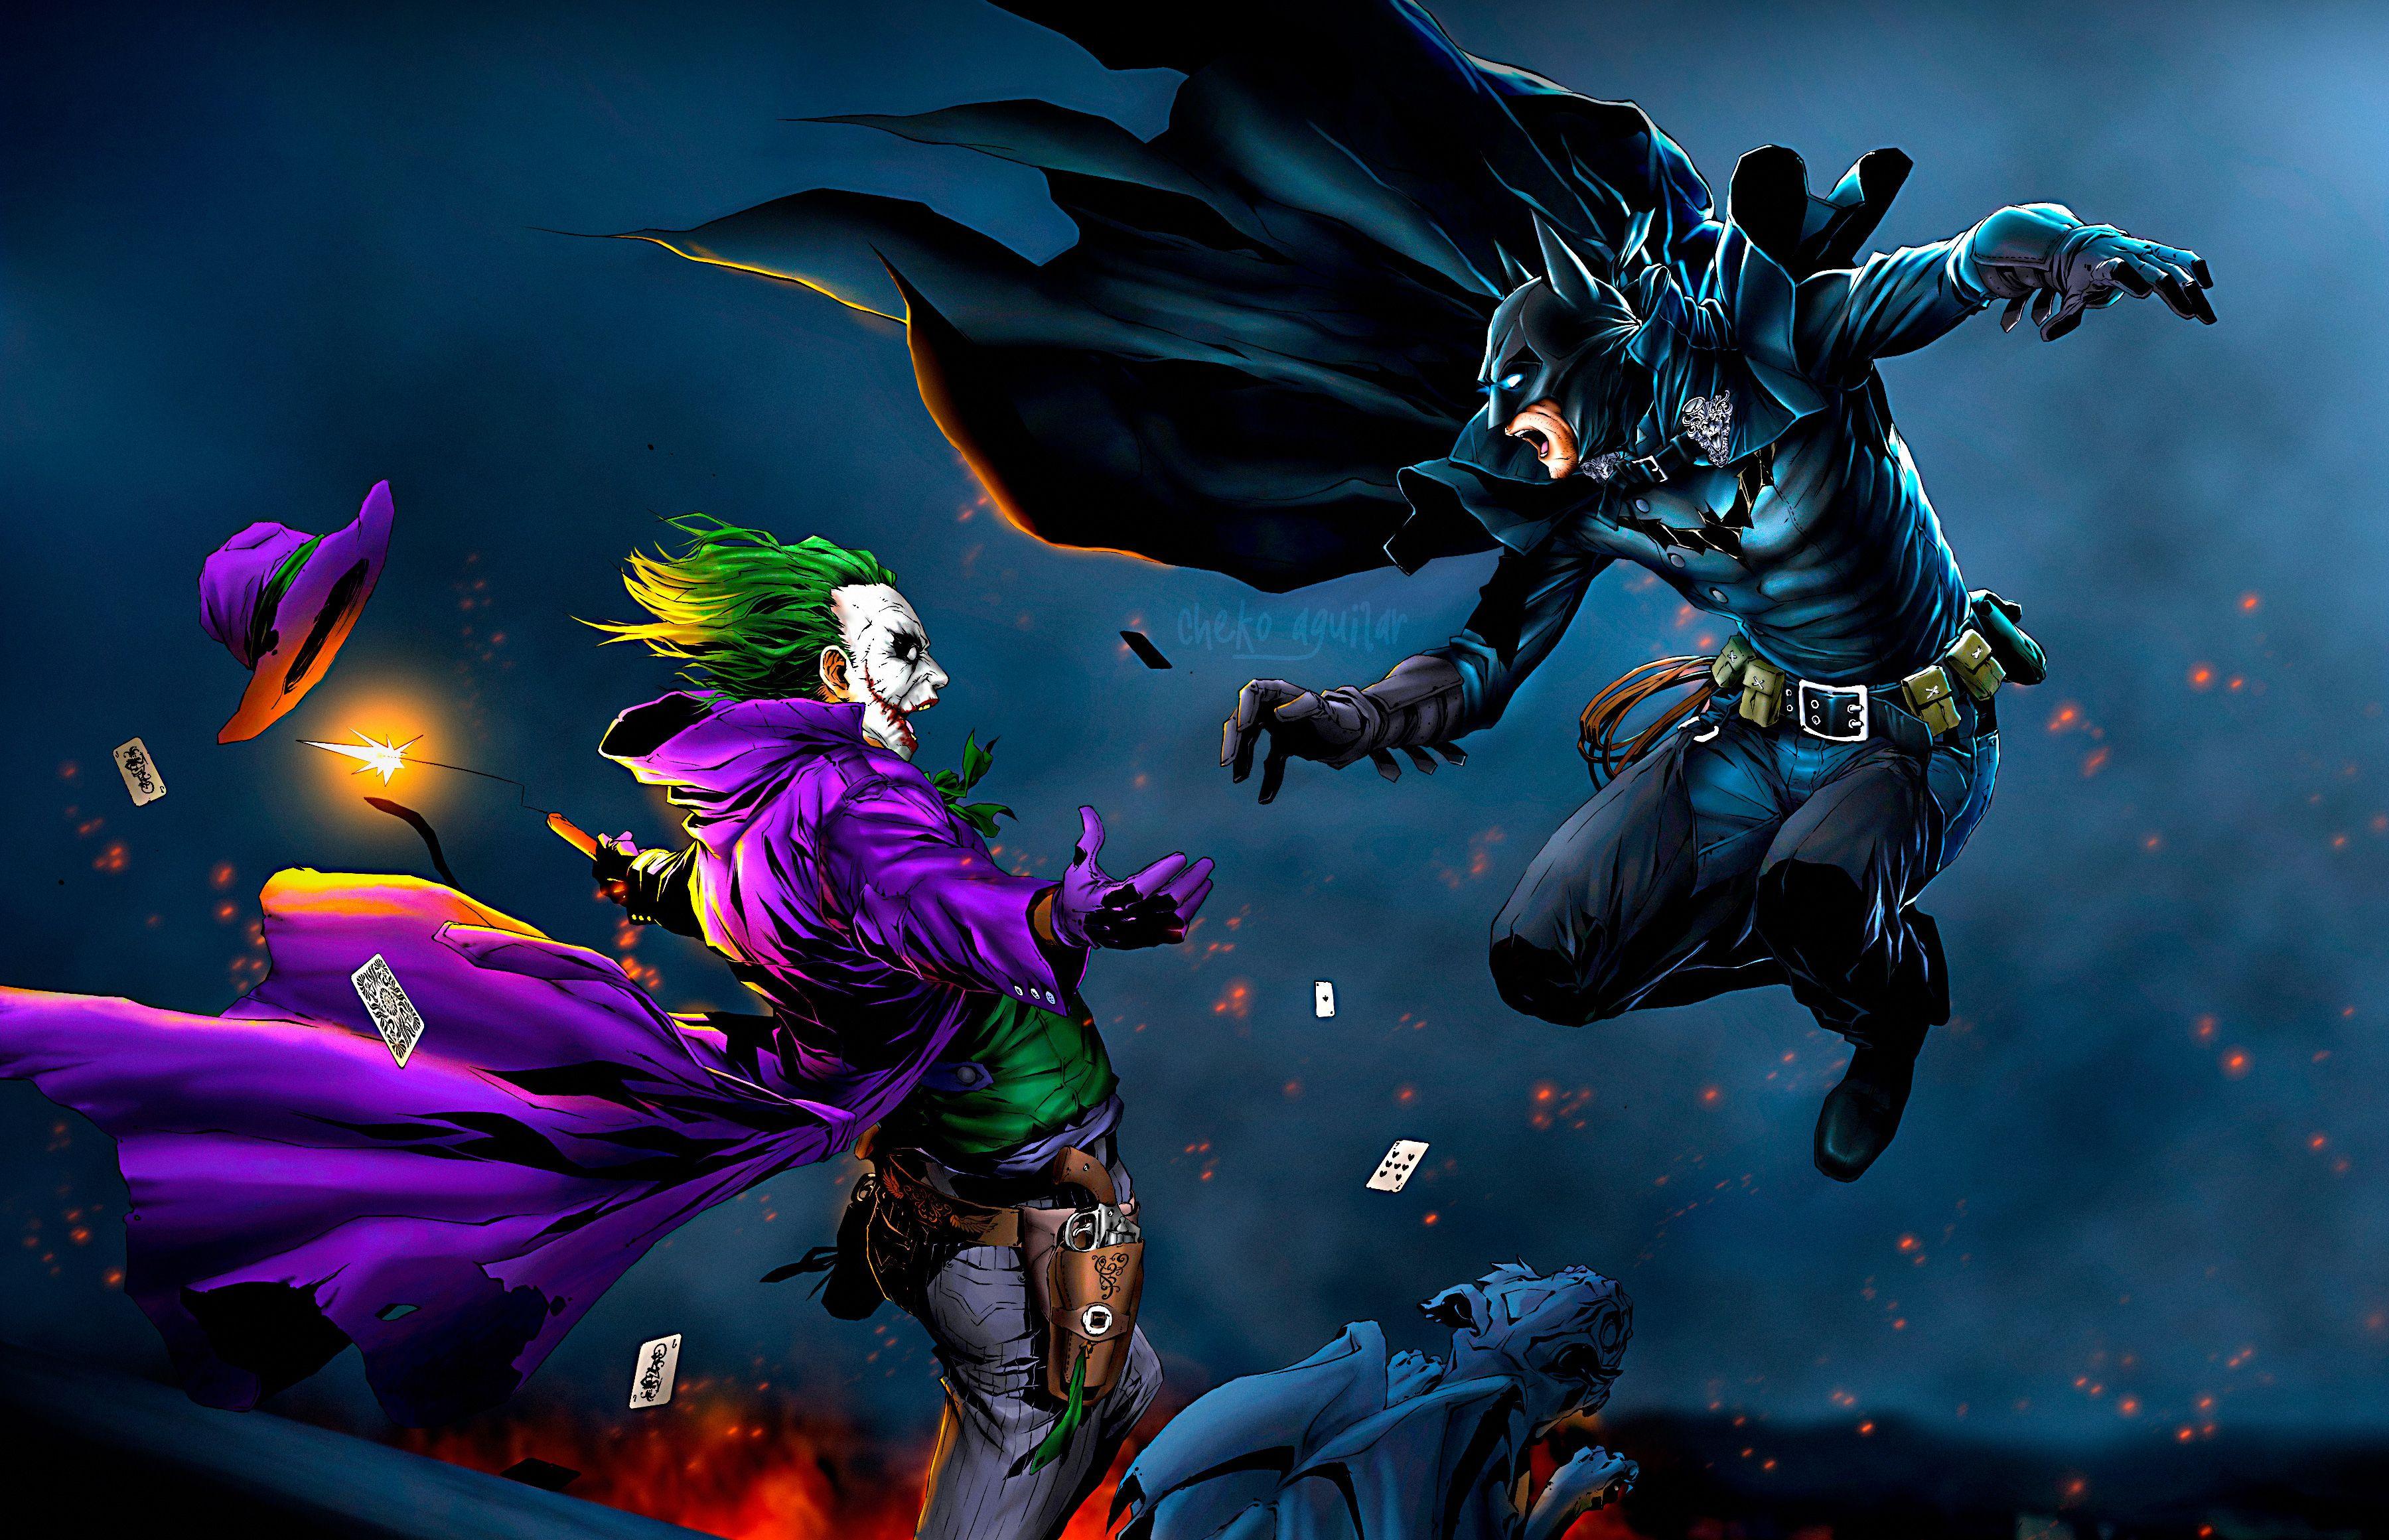 2. The Joker's iconic green hair in the Batman comics - wide 3